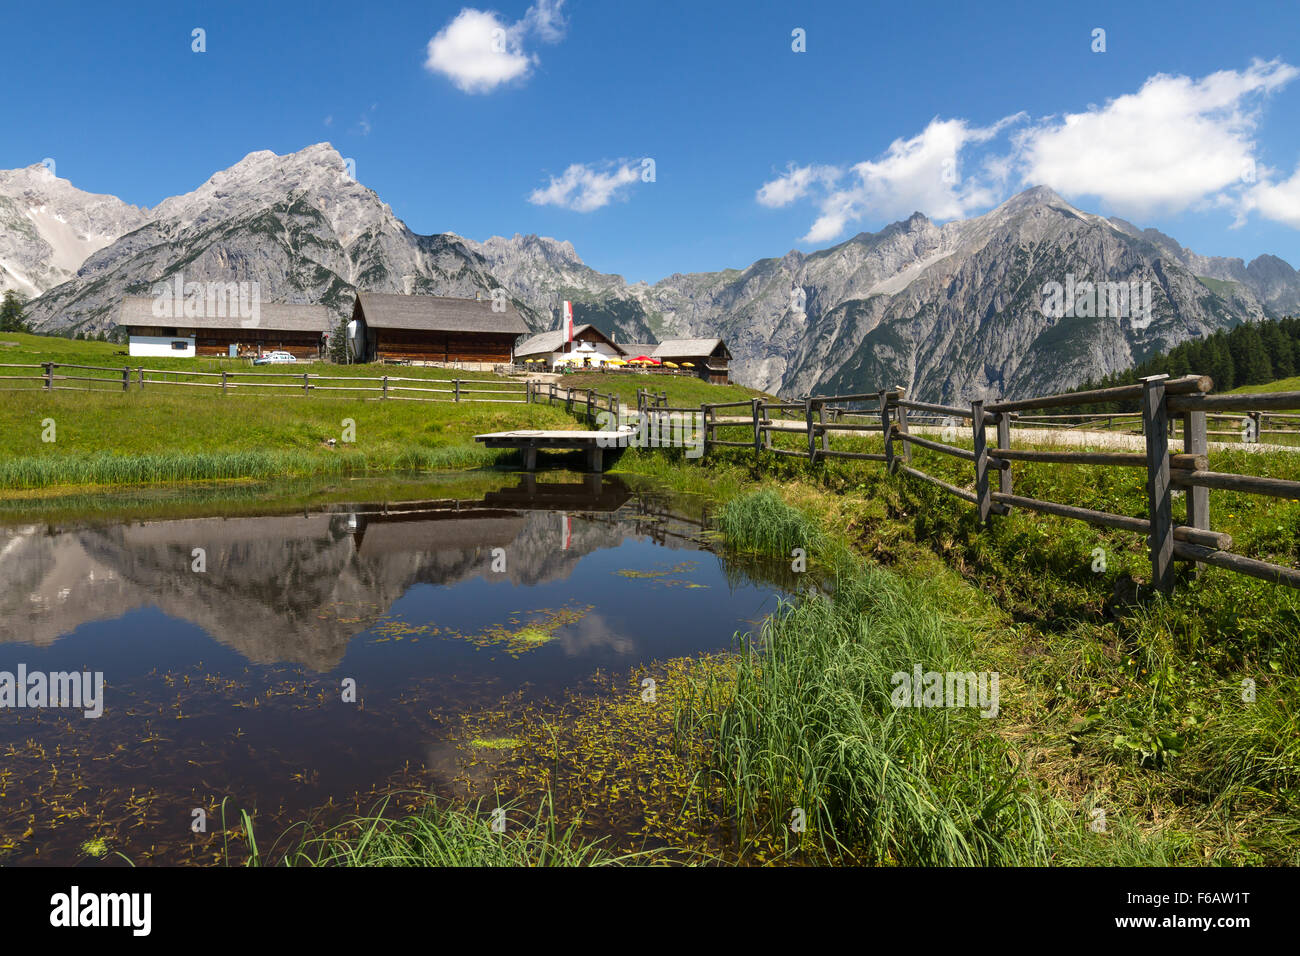 Rural scene in Alps with a lake in the foreground. Austria, Walderalm. Stock Photo